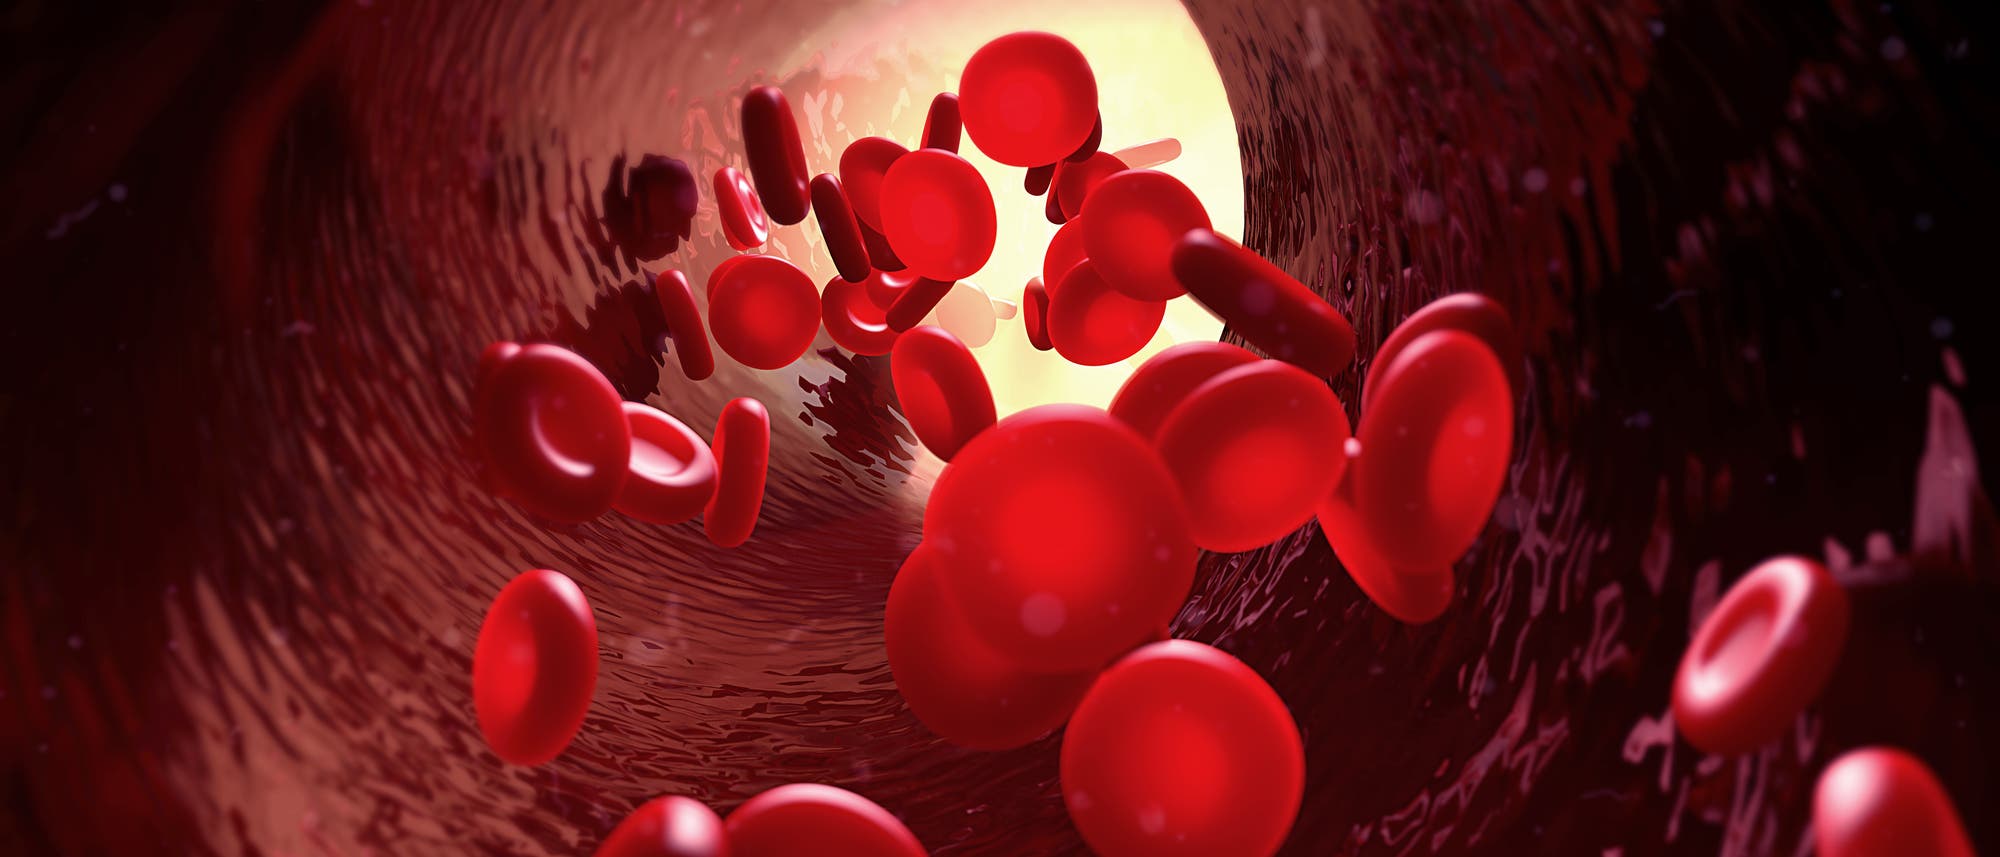 Rote Blutkörperchen in Blutbahn